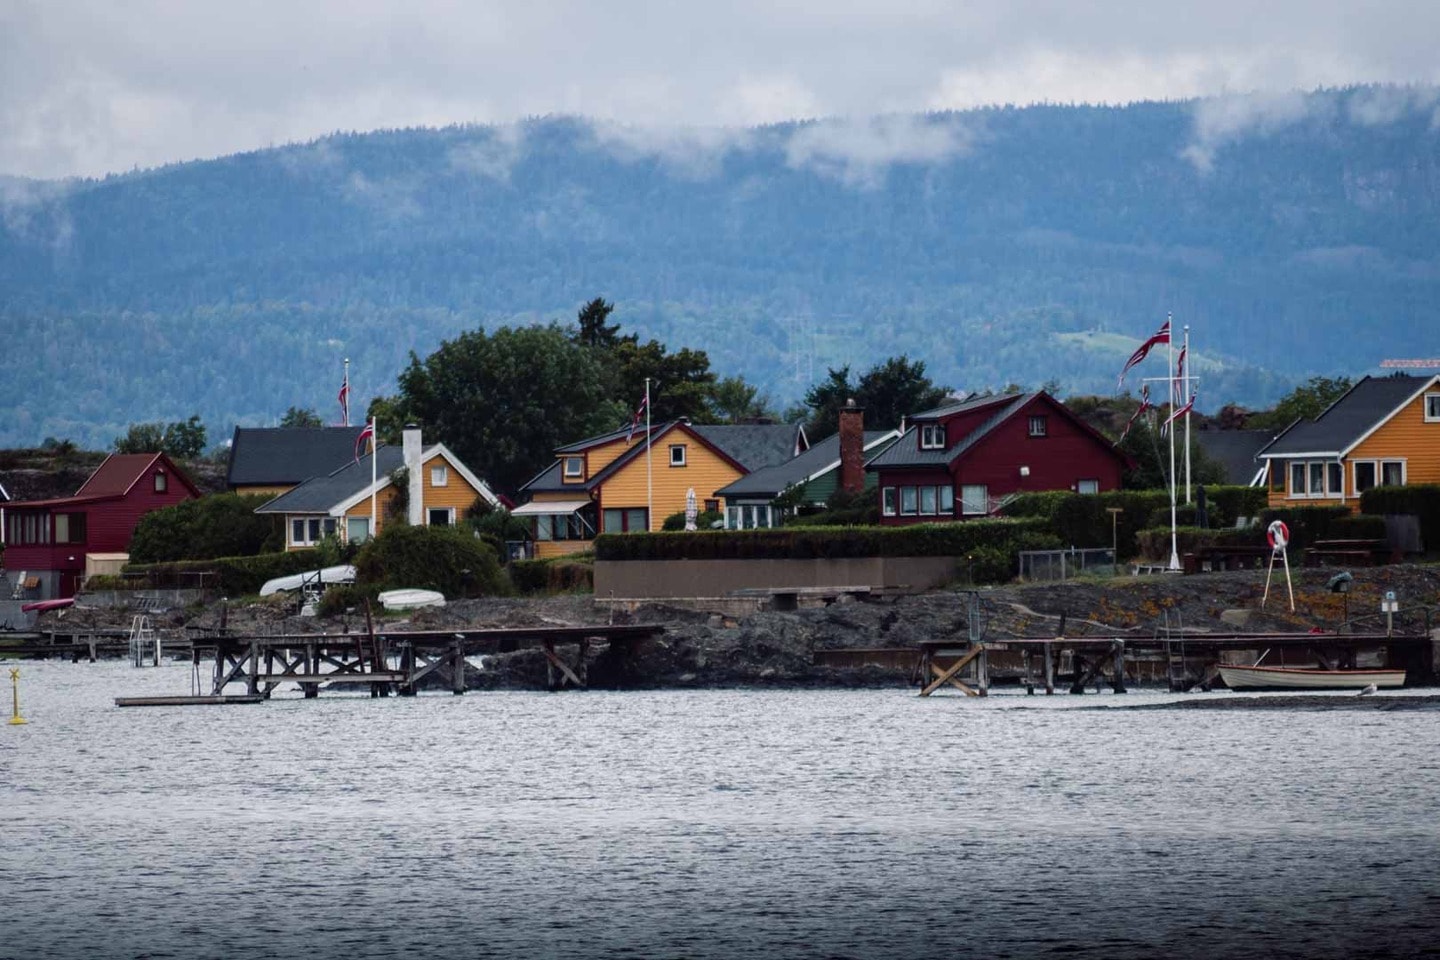 Oslo Fjord village